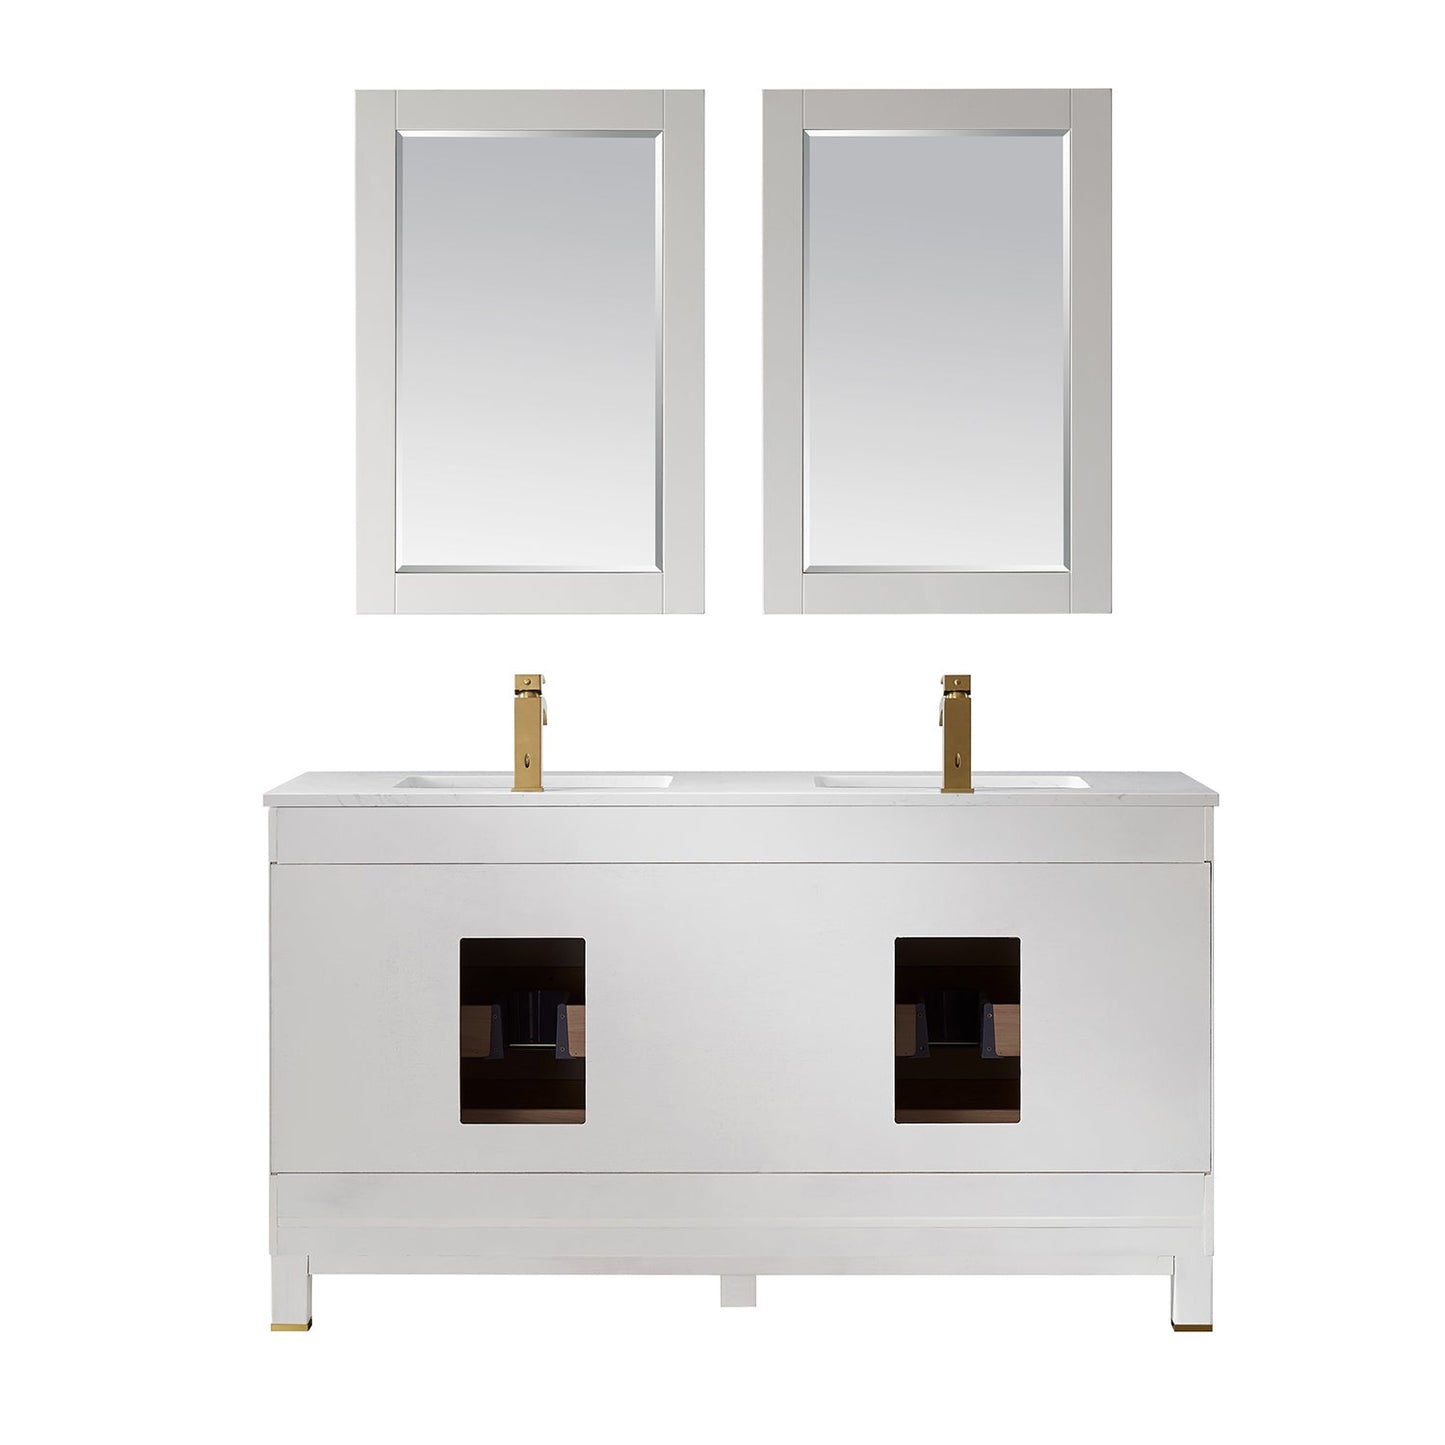 Jackson 60" Double Bathroom Vanity Set in White and Aosta White Composite Stone Countertop with Mirror